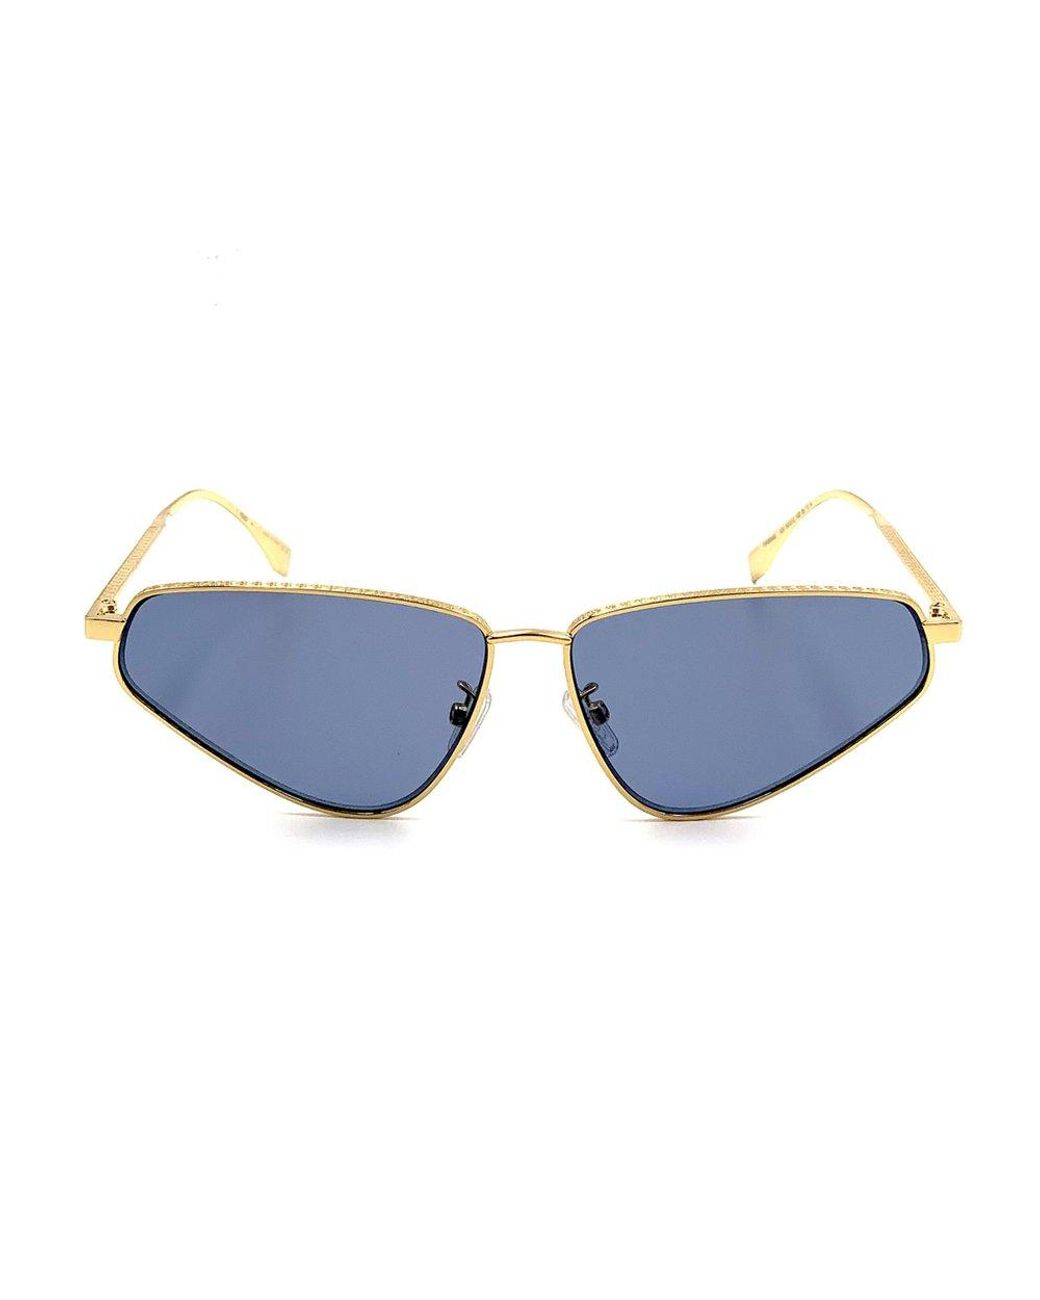 Fendi Triangle Frame Sunglasses in Blue | Lyst